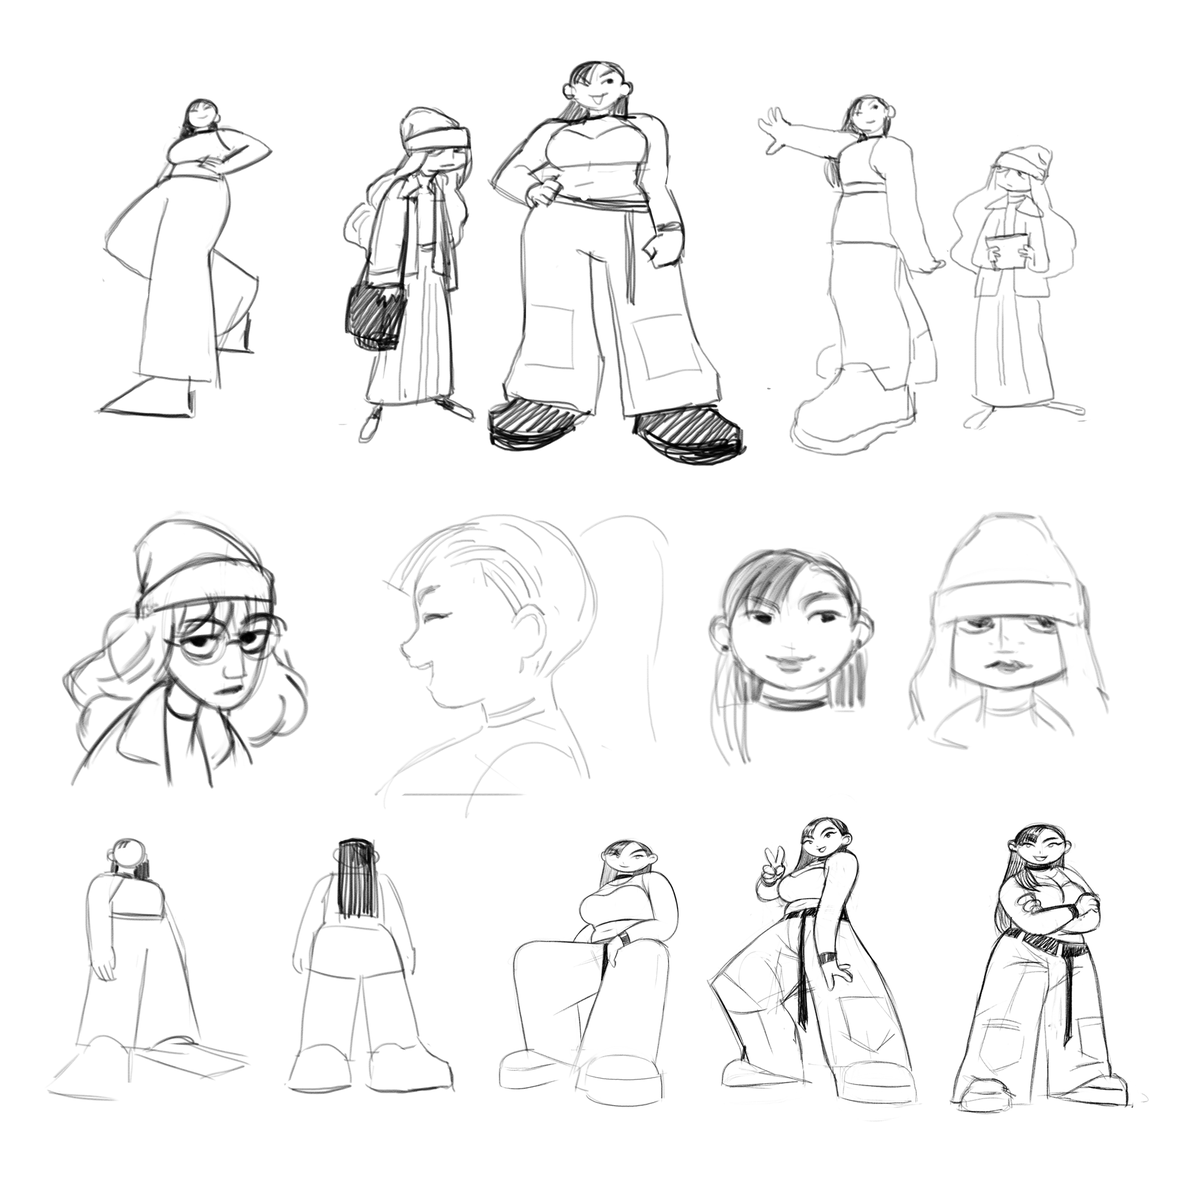 Some more development sketches 